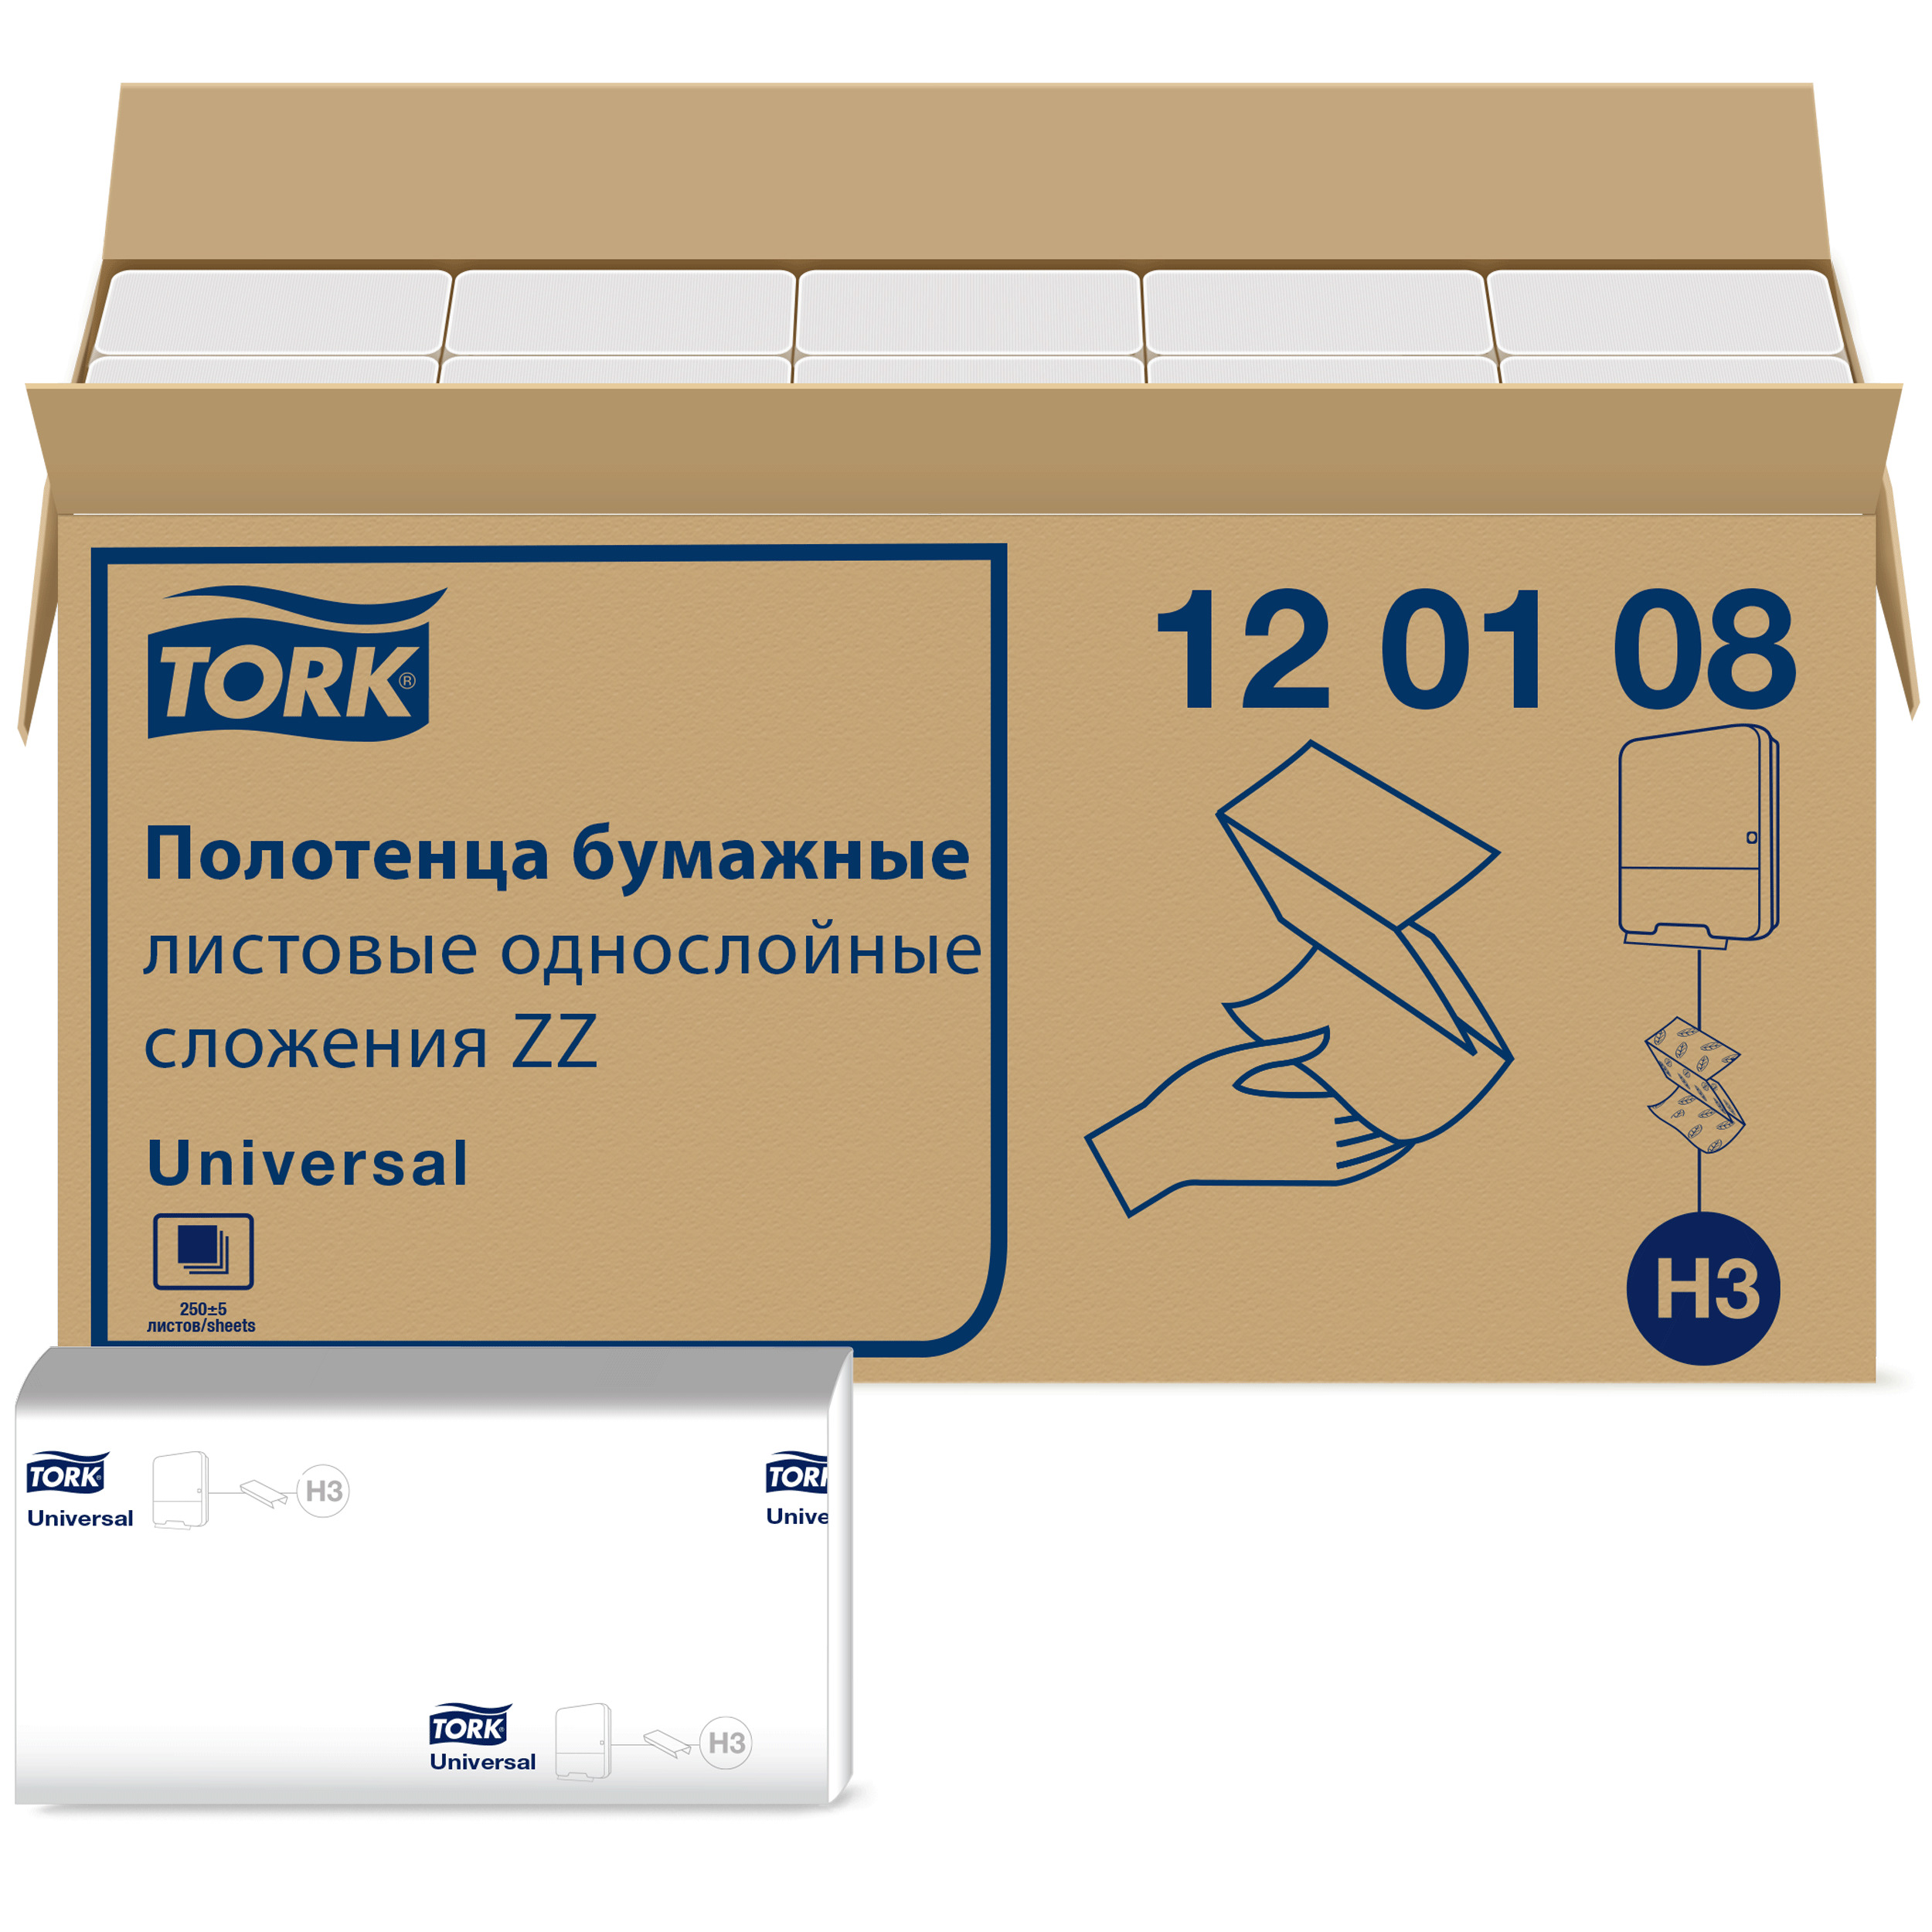 Полотенца tork zz h3. Tork Universal 120108. Полотенца бумажные Tork Universal Singlefold 120108. Tork листовые полотенца Singlefold сложения ZZ 290184. 120108 Tork Universal листовые полотенца сложение ZZ система h3.